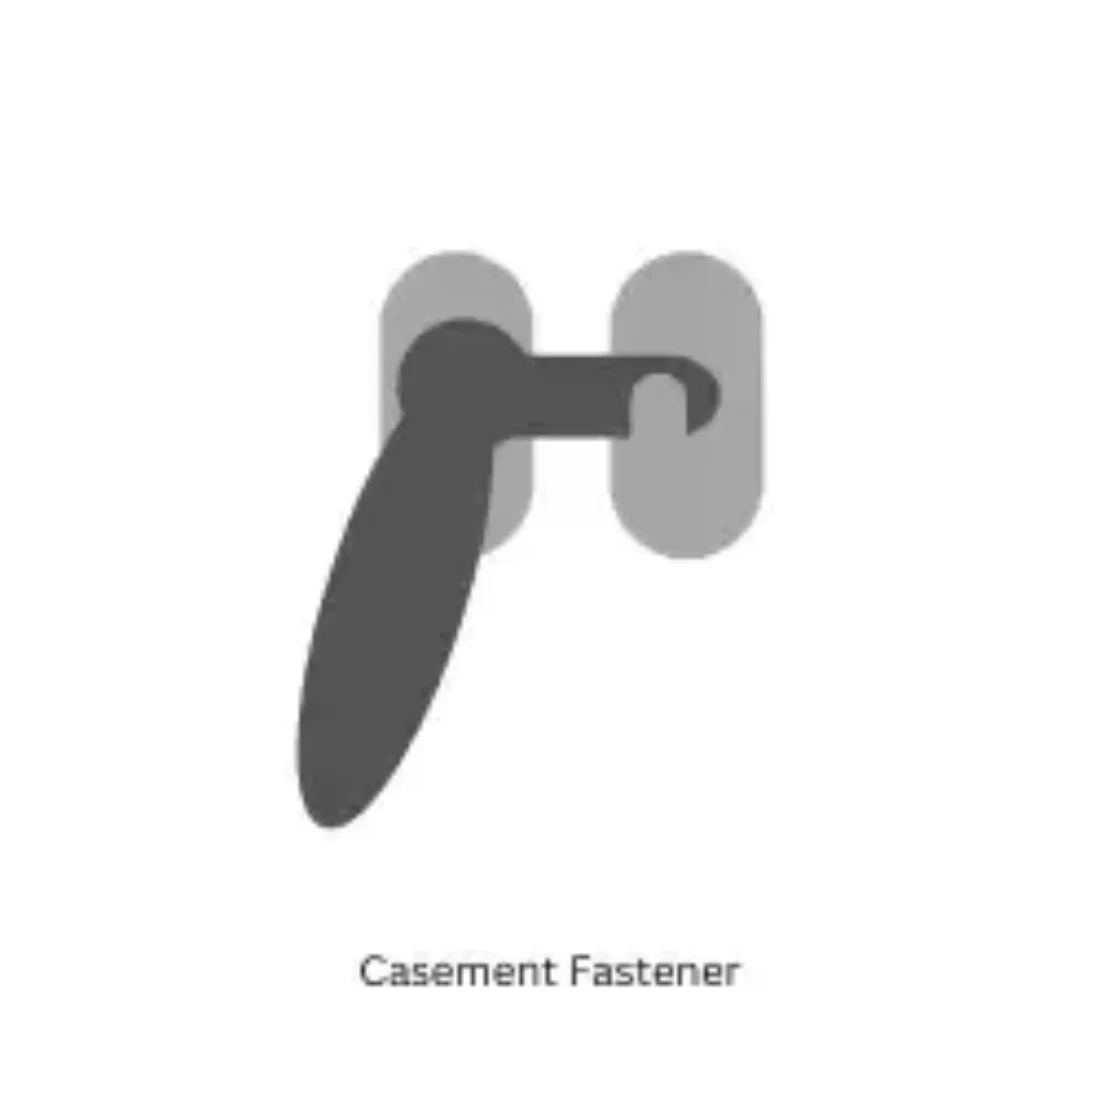 Casement Fastener Design